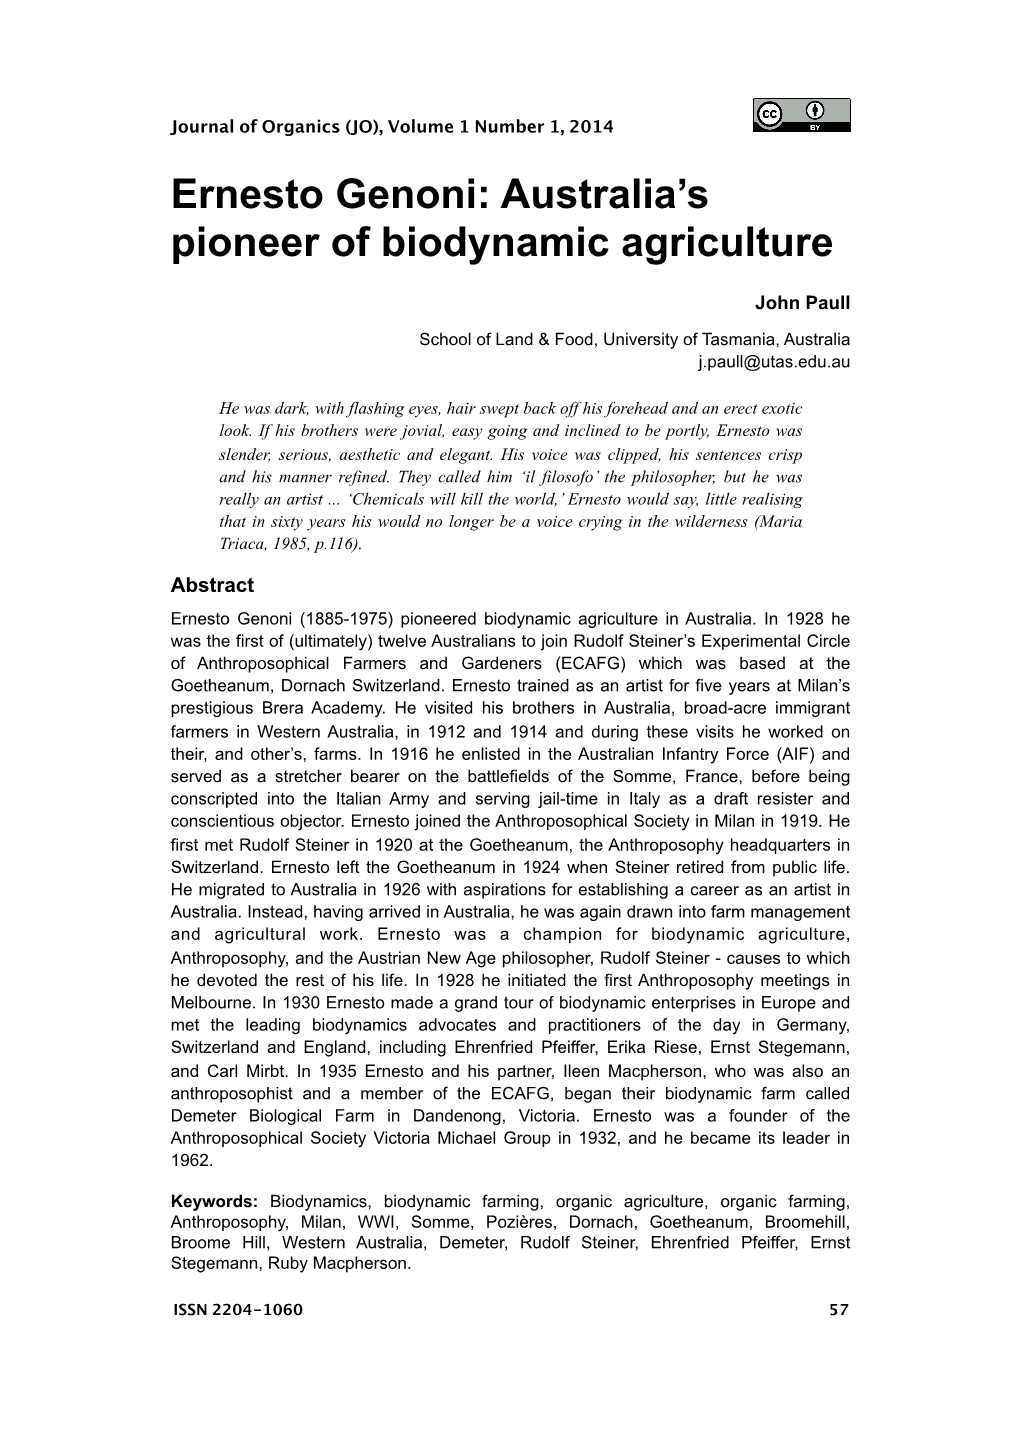 Ernesto Genoni: Australia's Pioneer of Biodynamic Agriculture